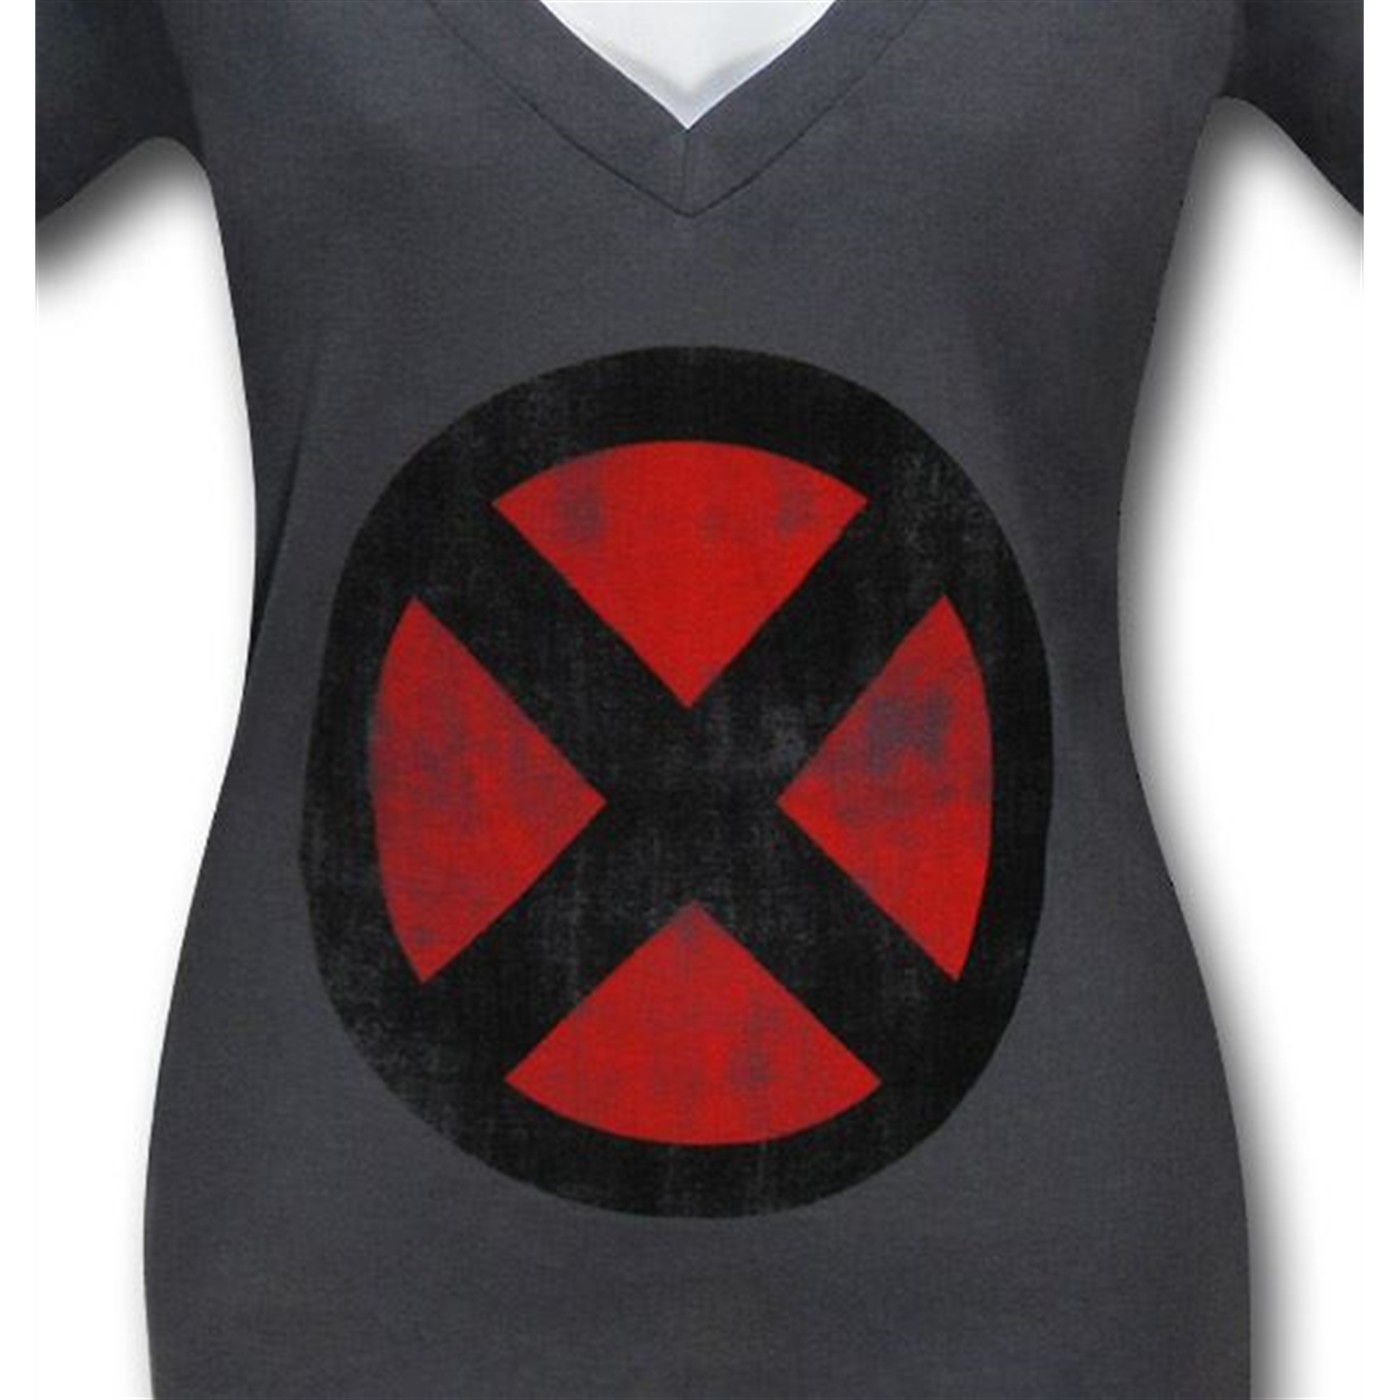 X-Men V-Neck Dark Grey Women's 30 Single T-Shirt